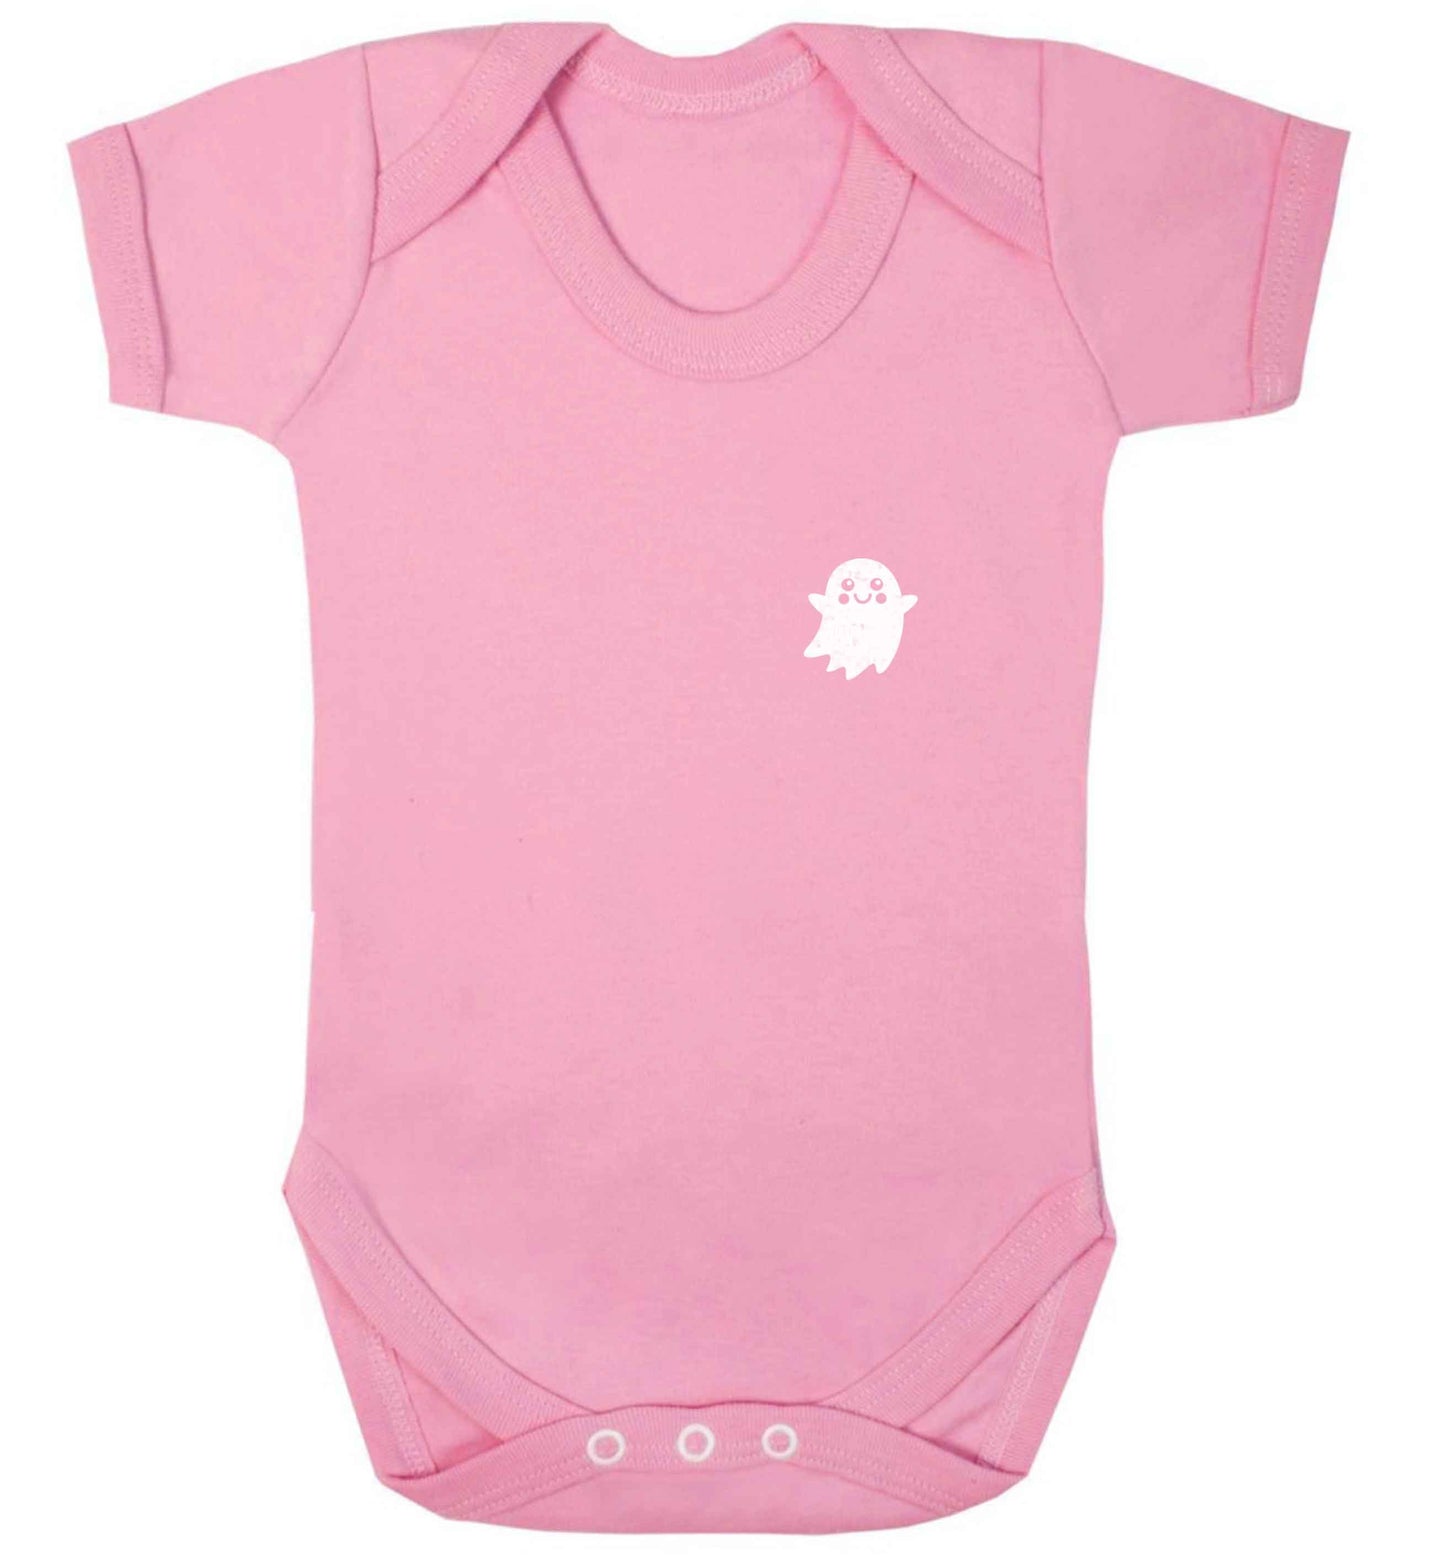 Pocket ghost baby vest pale pink 18-24 months